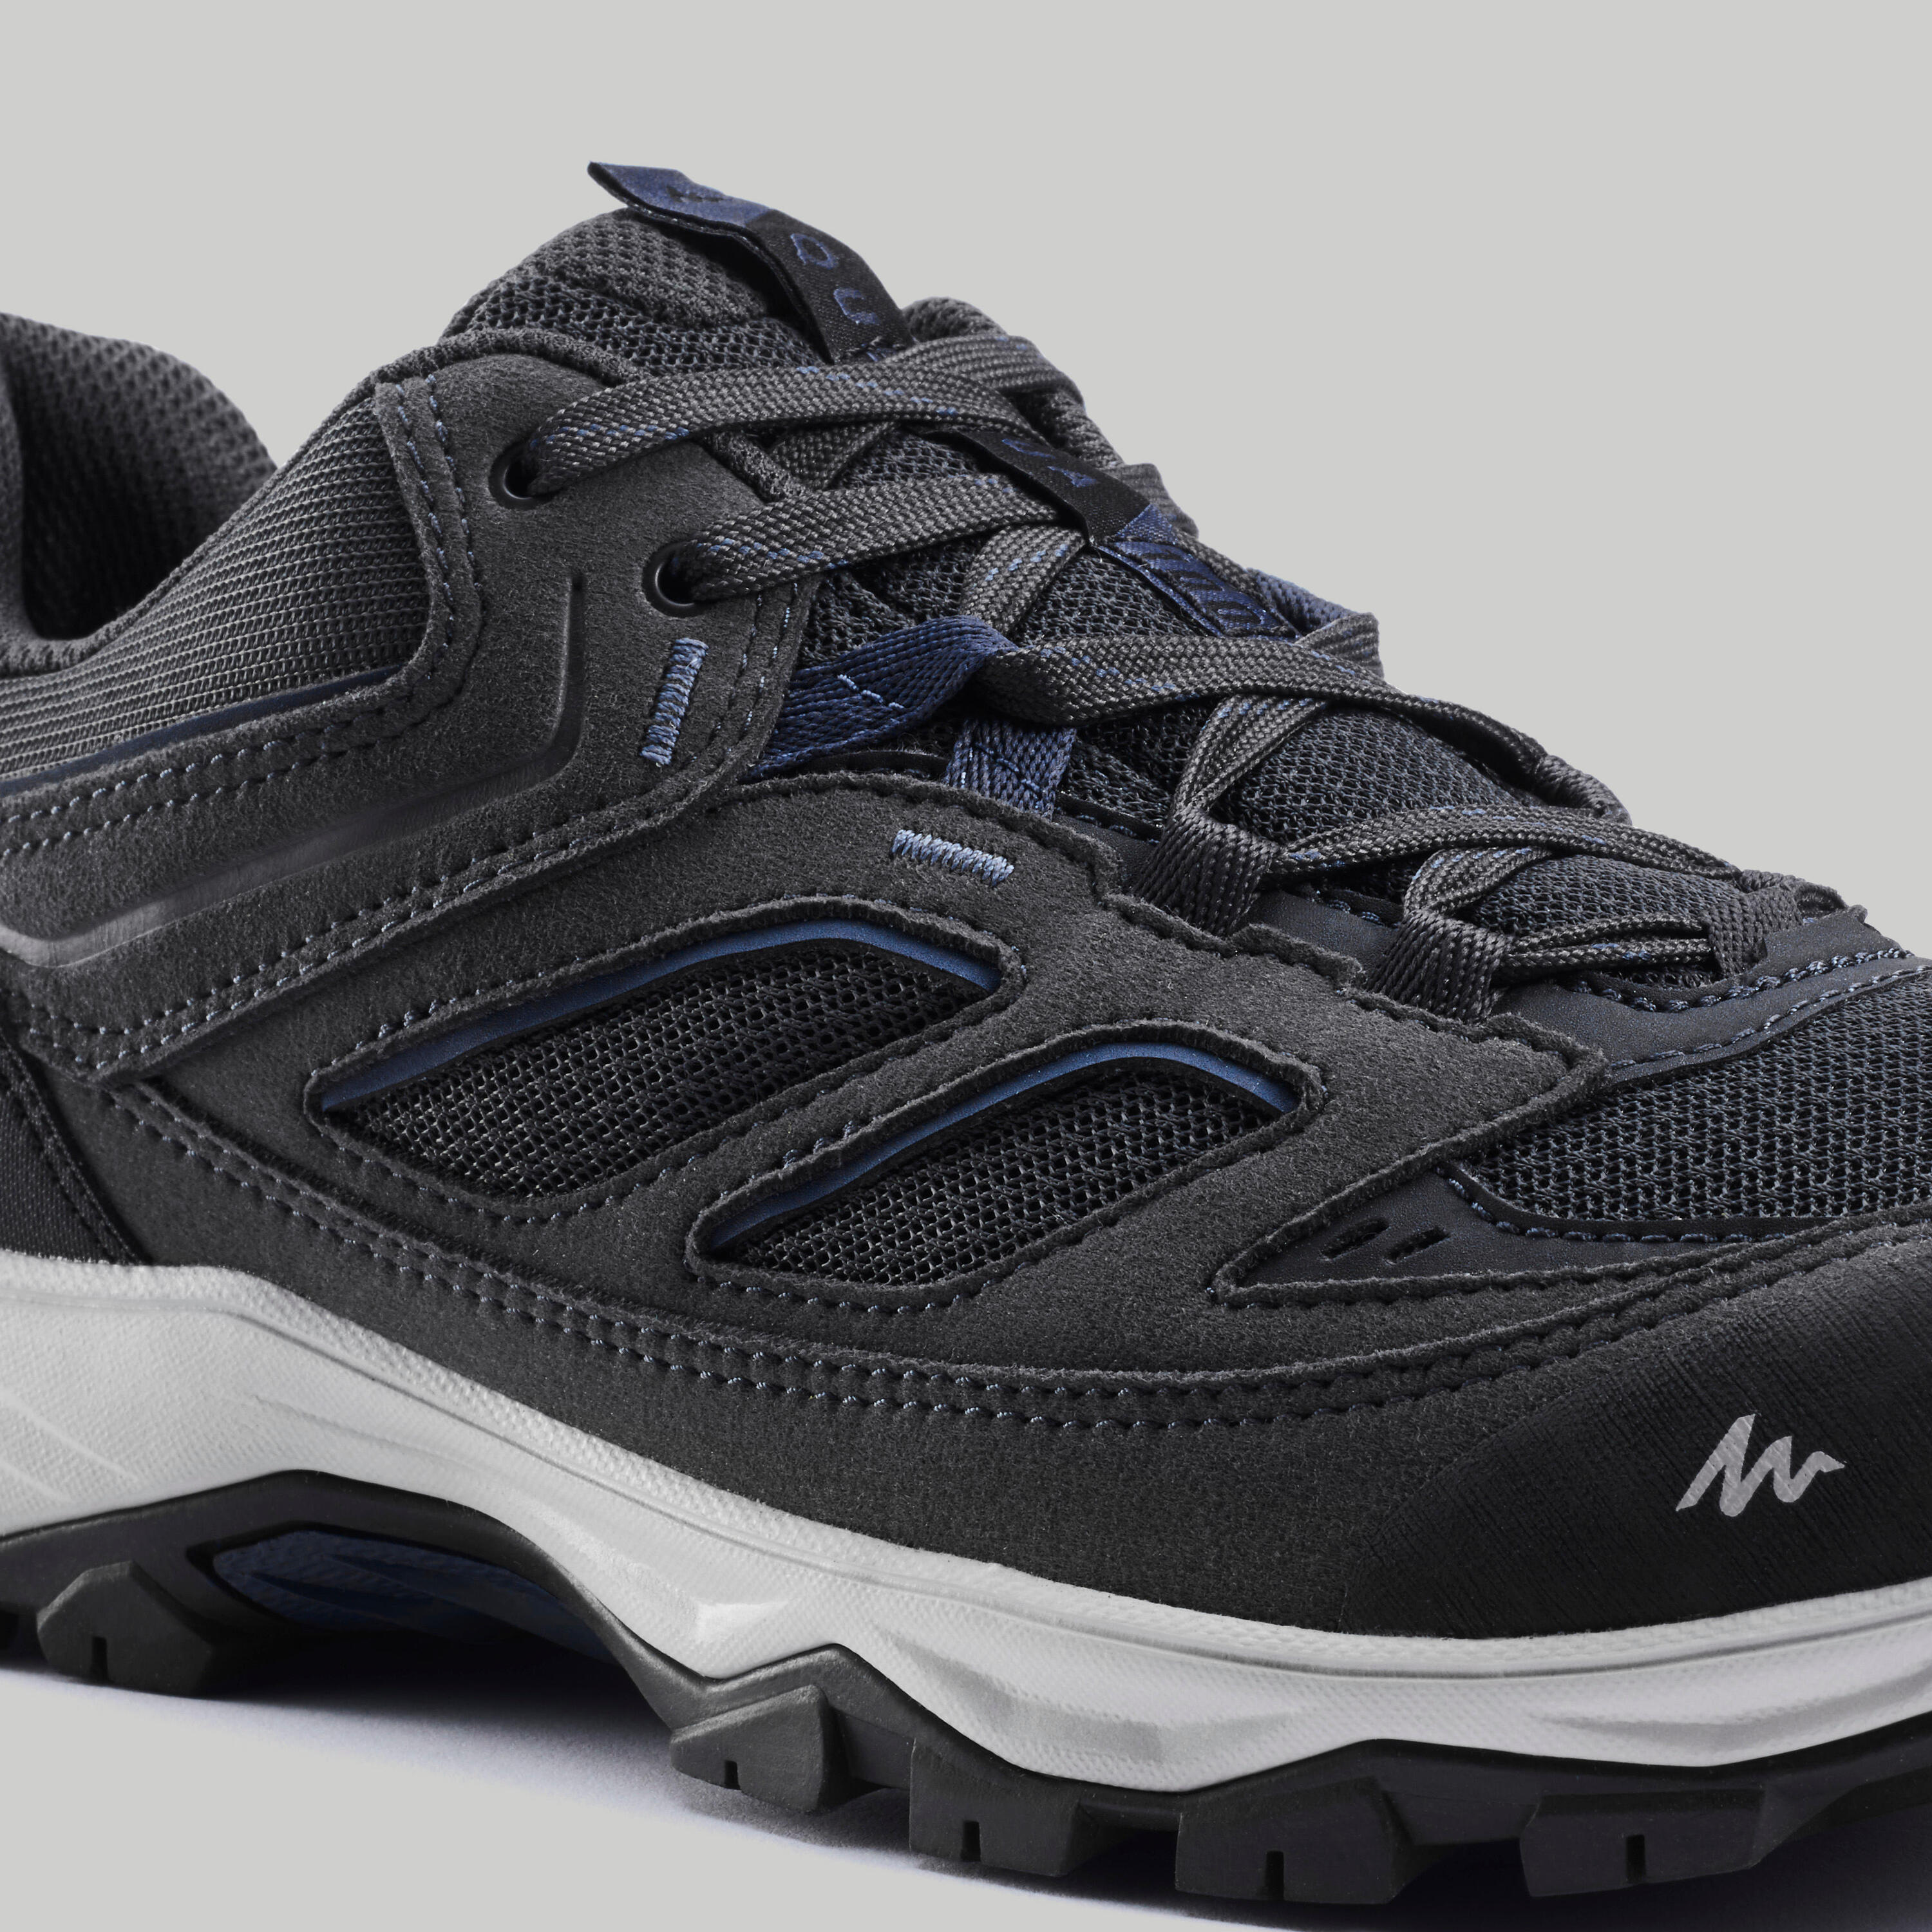 Men's mountain hiking shoes - MH100 - Grey 8/8